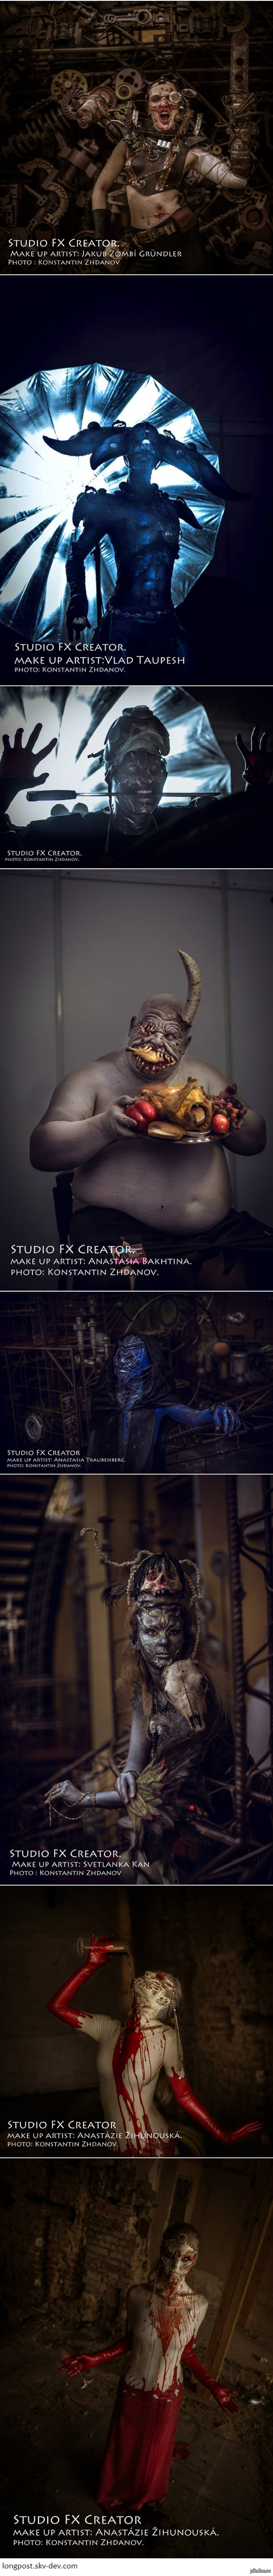 INTERBEAUTY PRAGUE 17.10.2014  Studio FX Creator. Barrandov   .